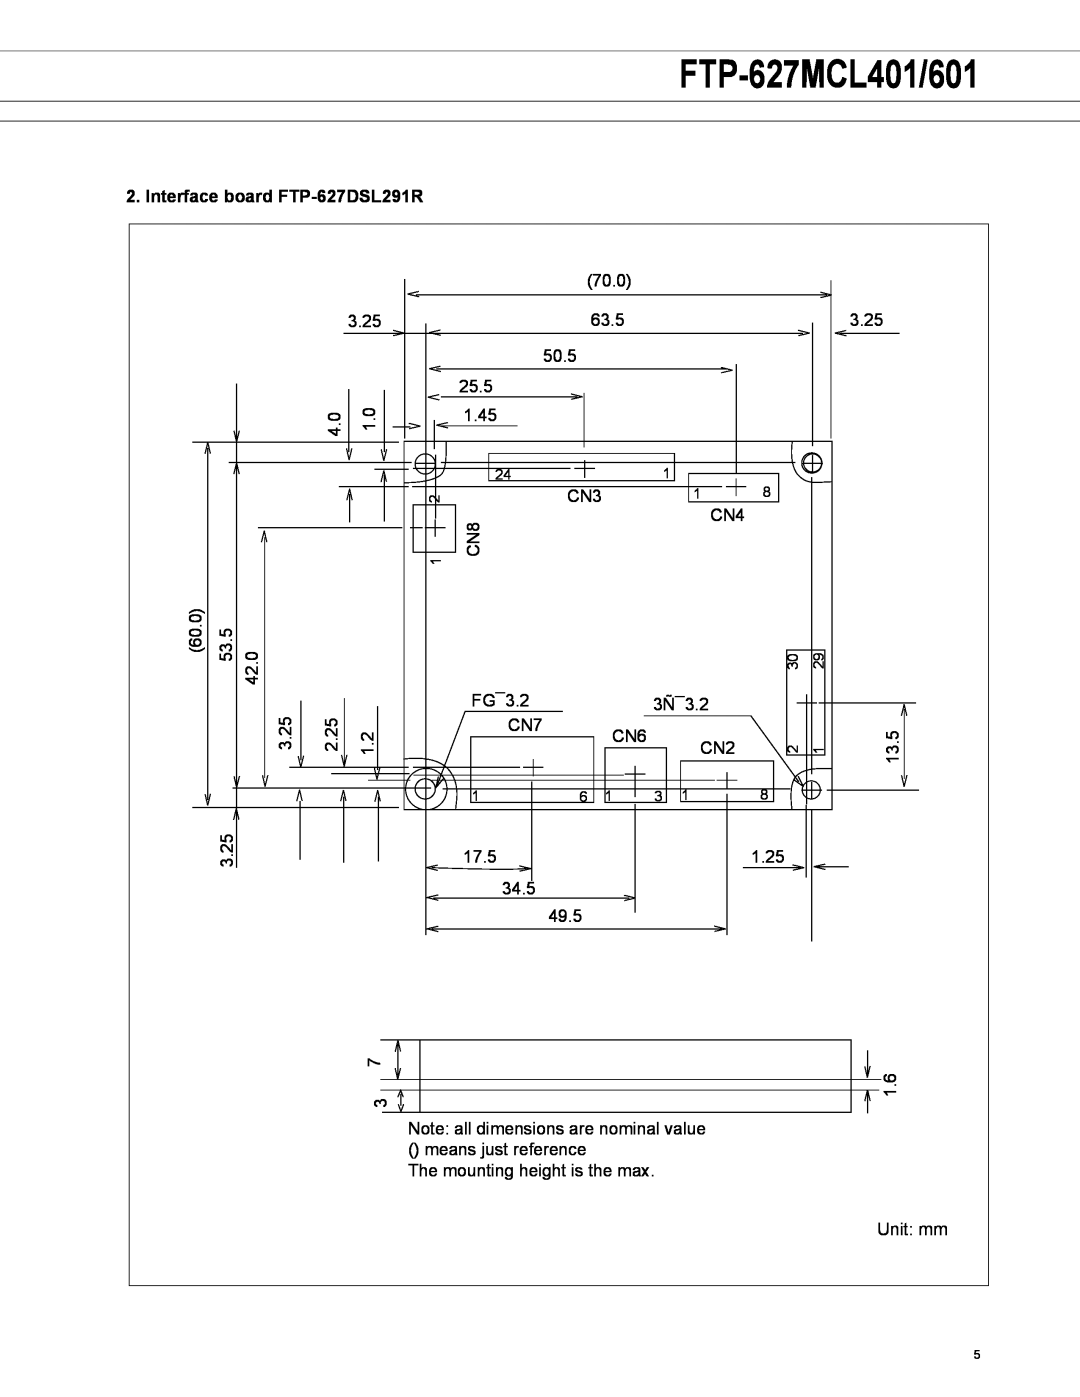 Fujitsu FTP-607 Series manual Interface board FTP-627DSL291R, FTP-627MCL401/601 